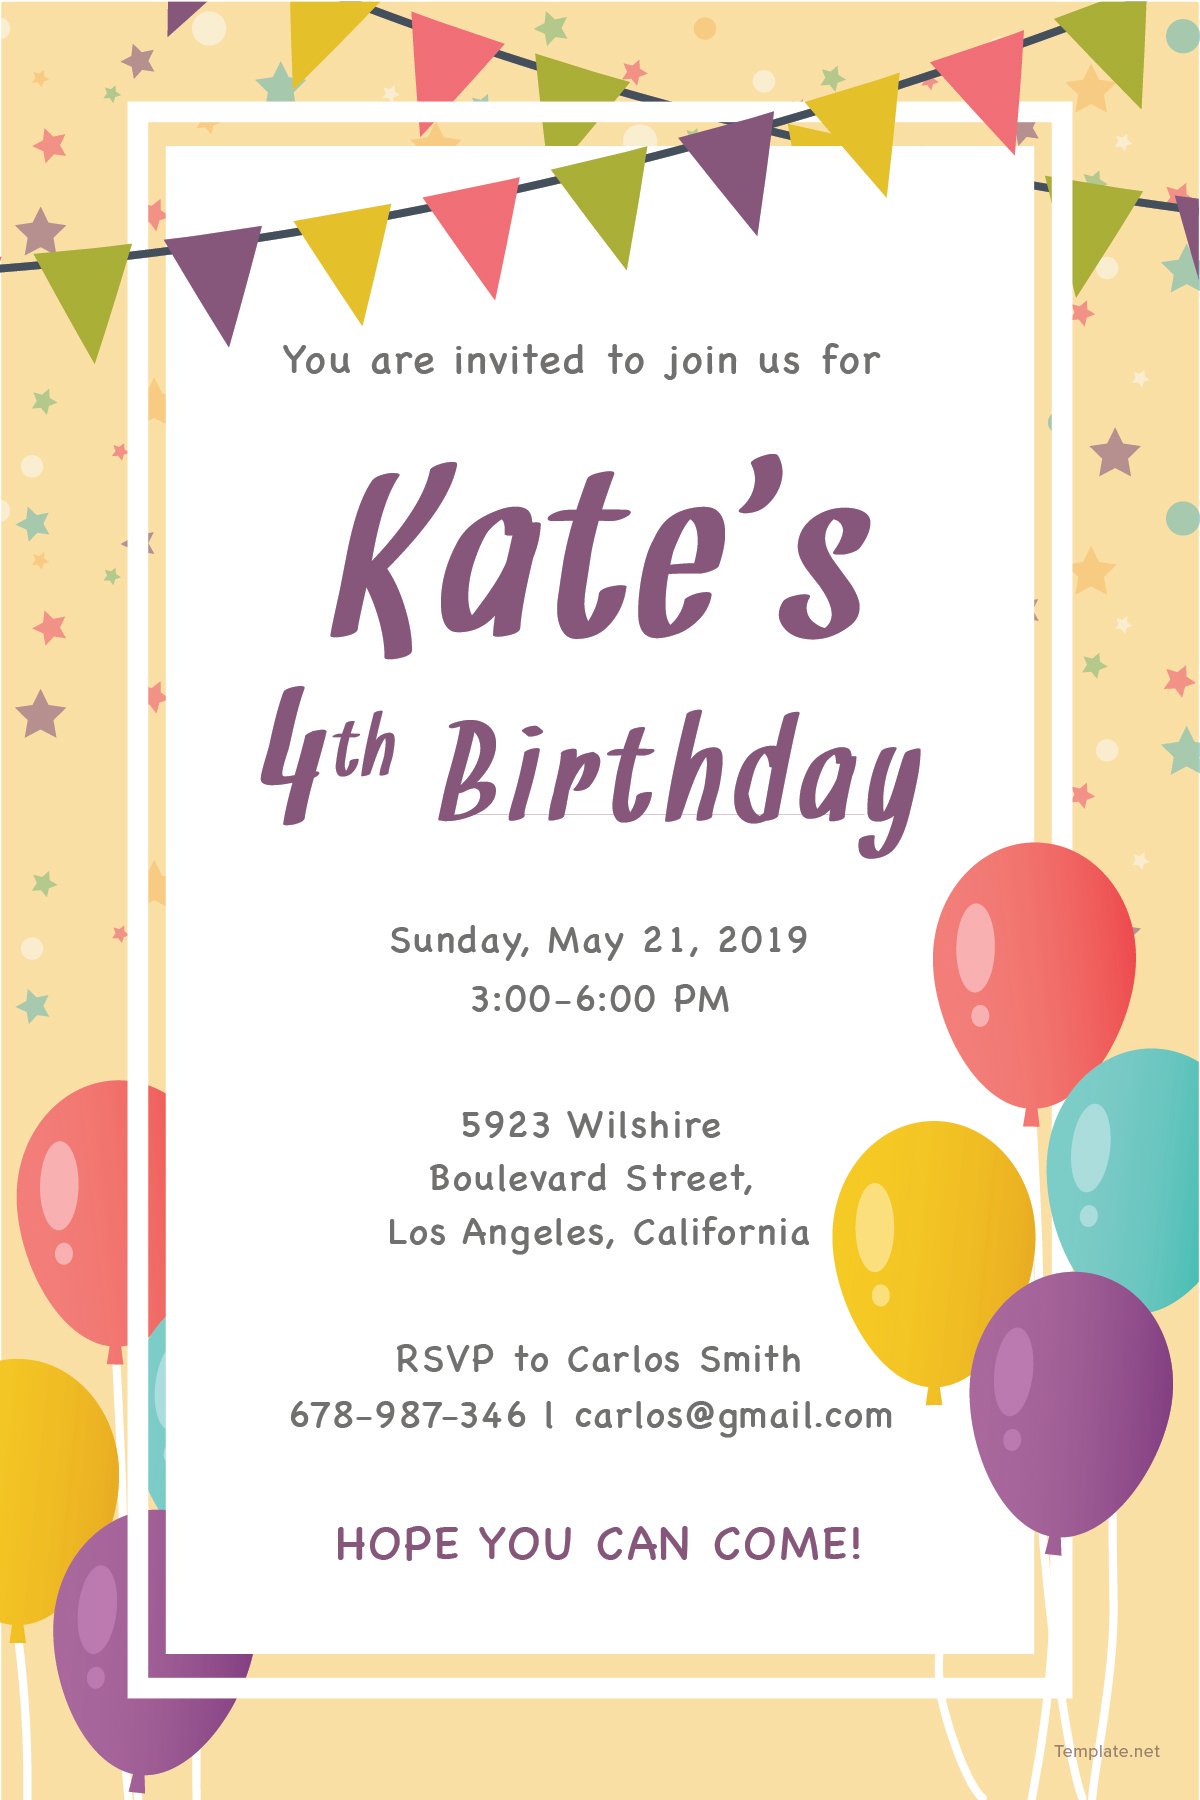 Email Birthday Invitation Template In Adobe Photoshop Illustrator